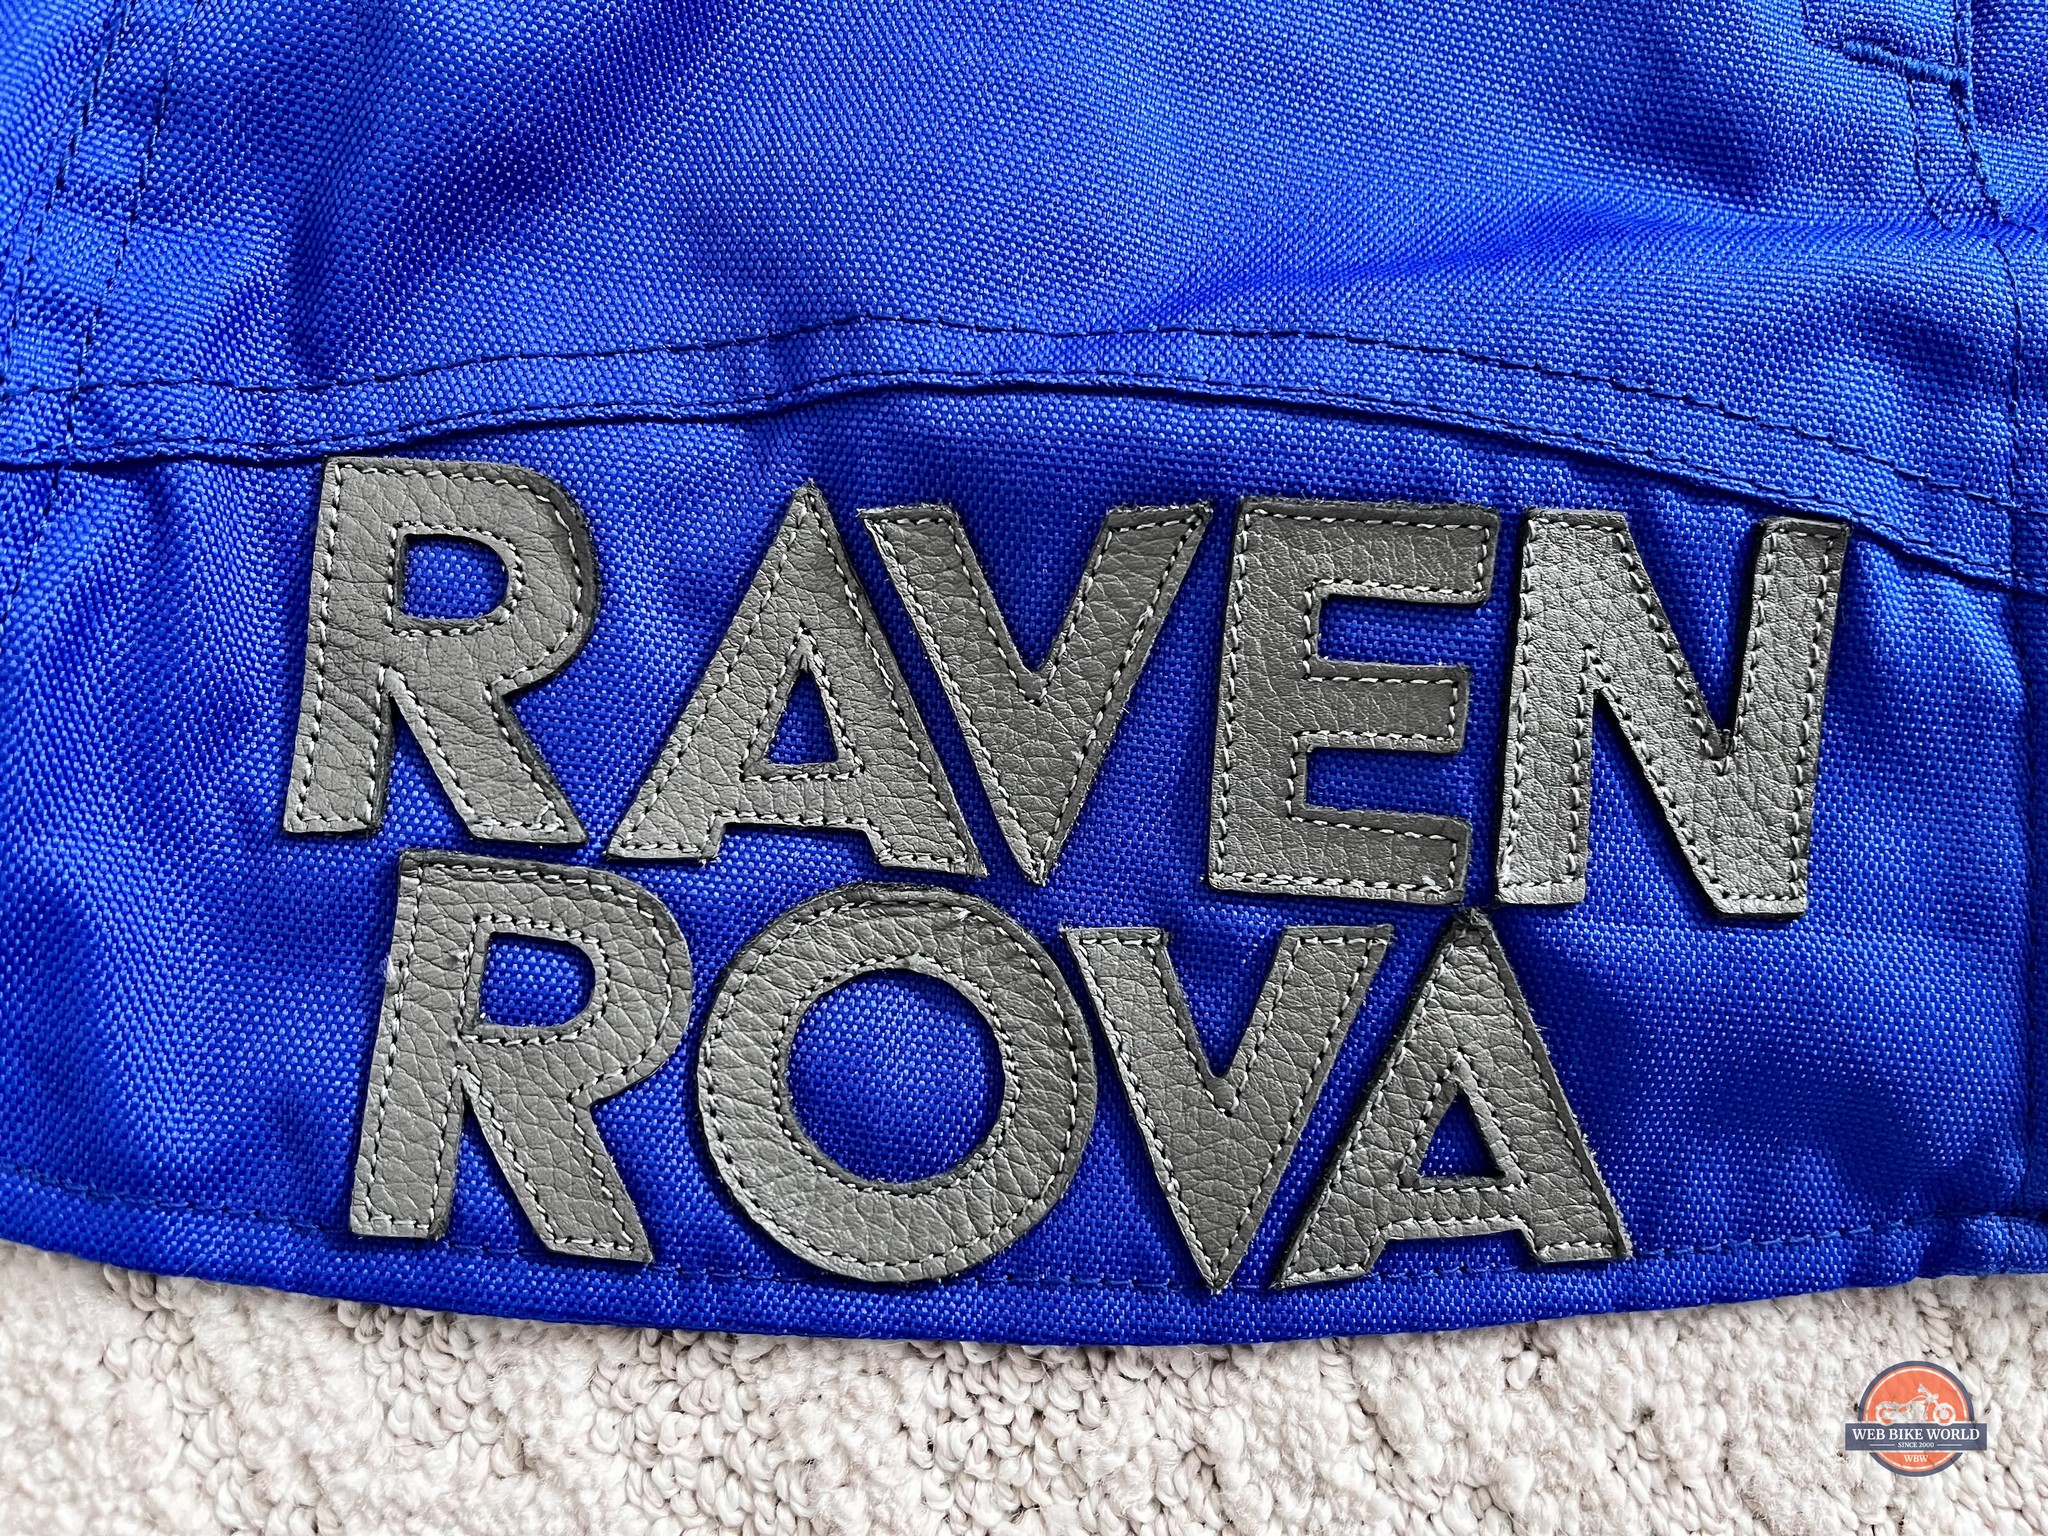 Closeup of the Raven Rova branding on the jacket